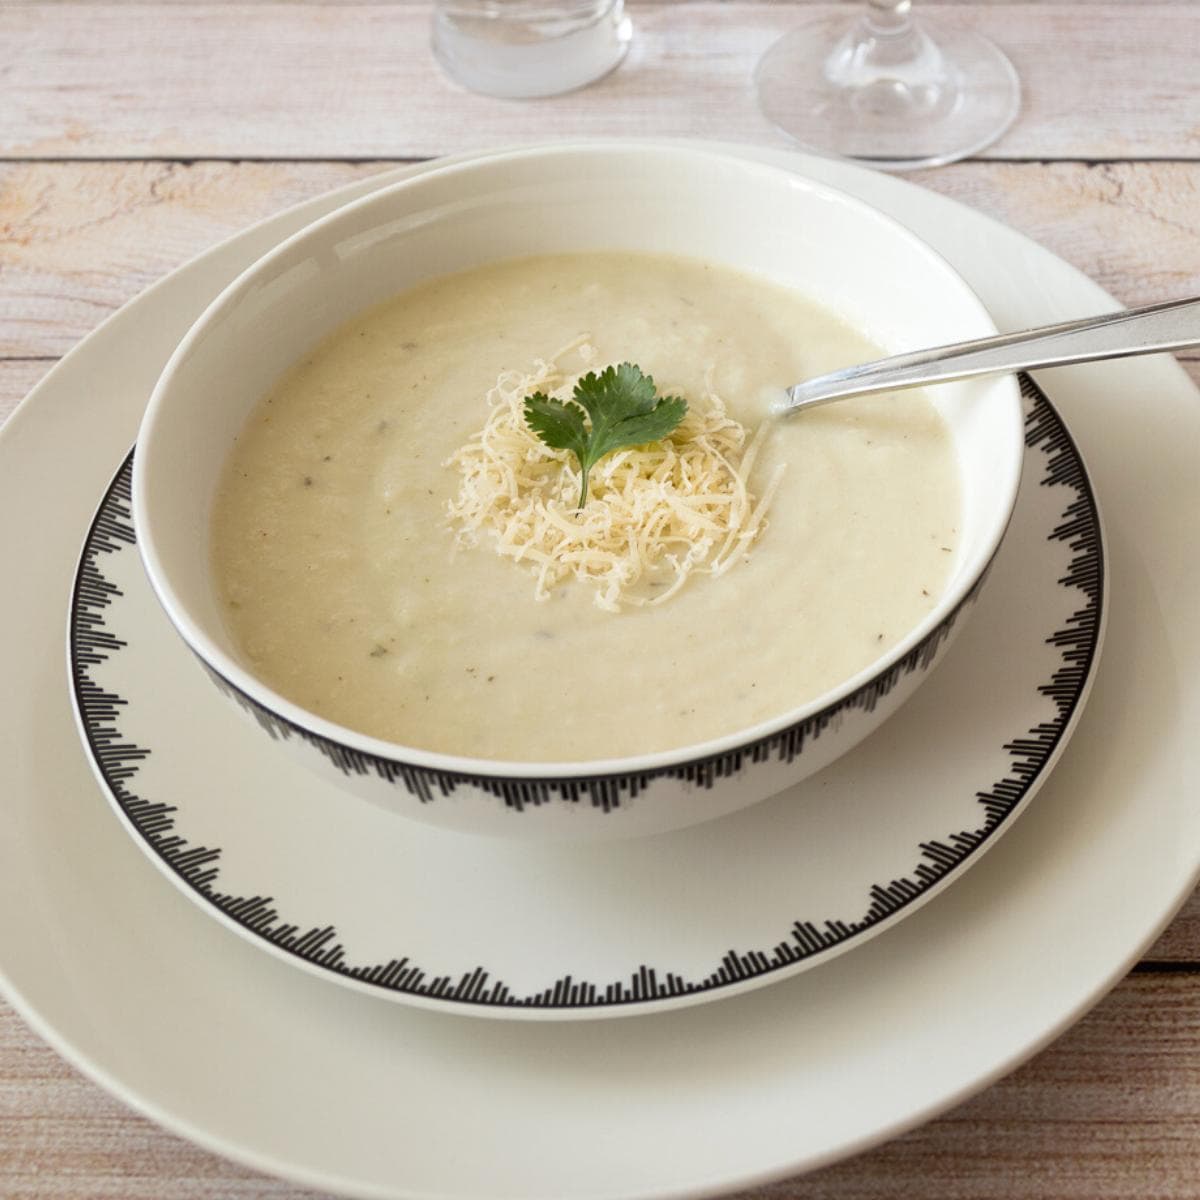 Cauliflower soup in a bowl.